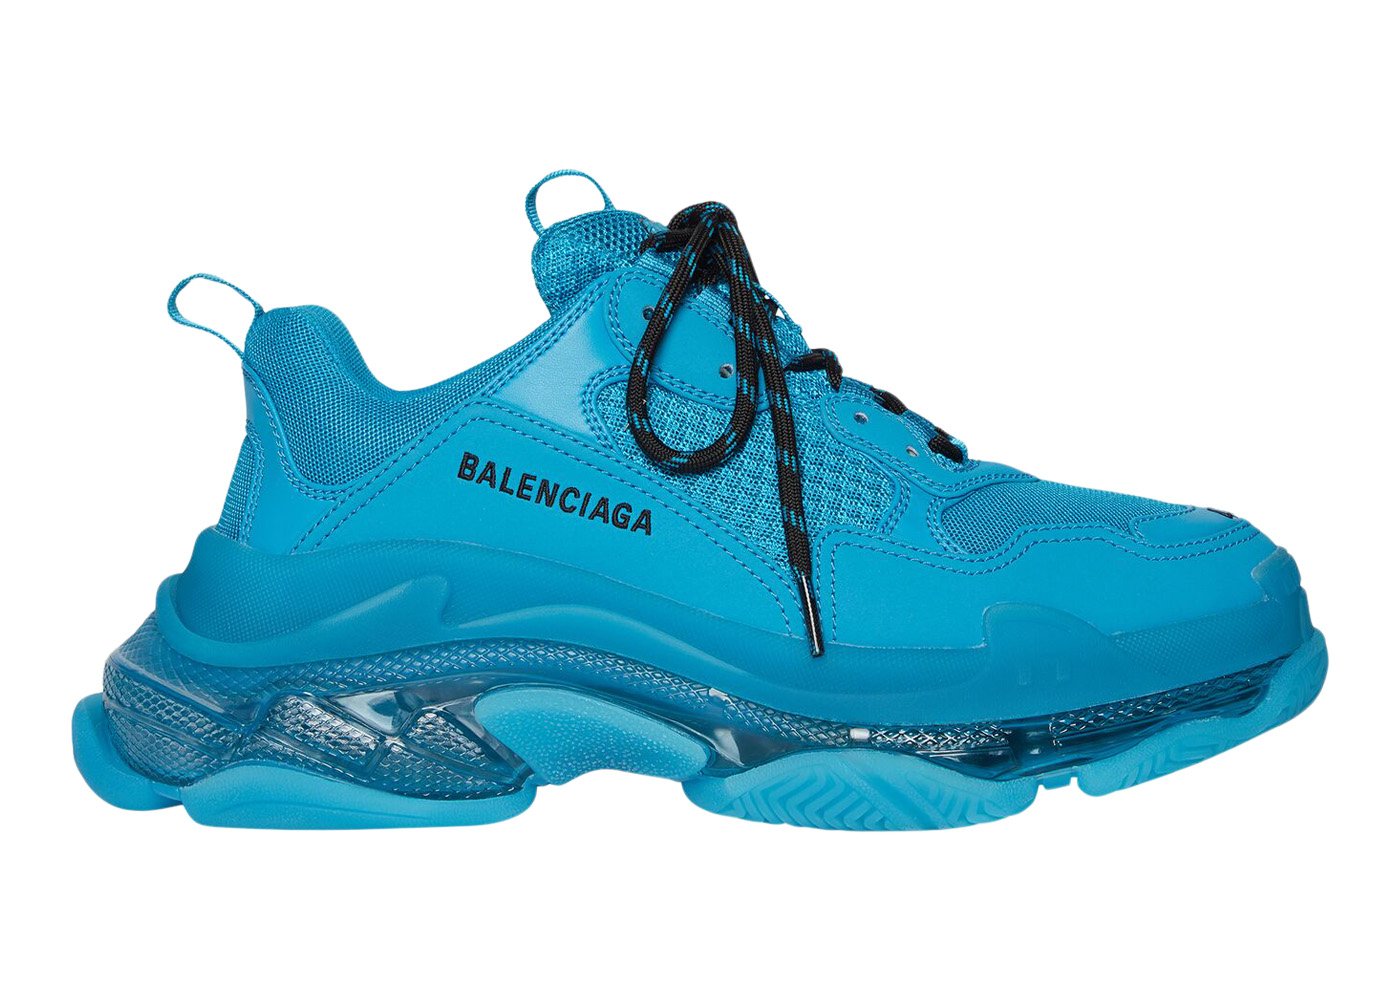 Balenciaga Triple S Clear Sole Teal Blue sneakers